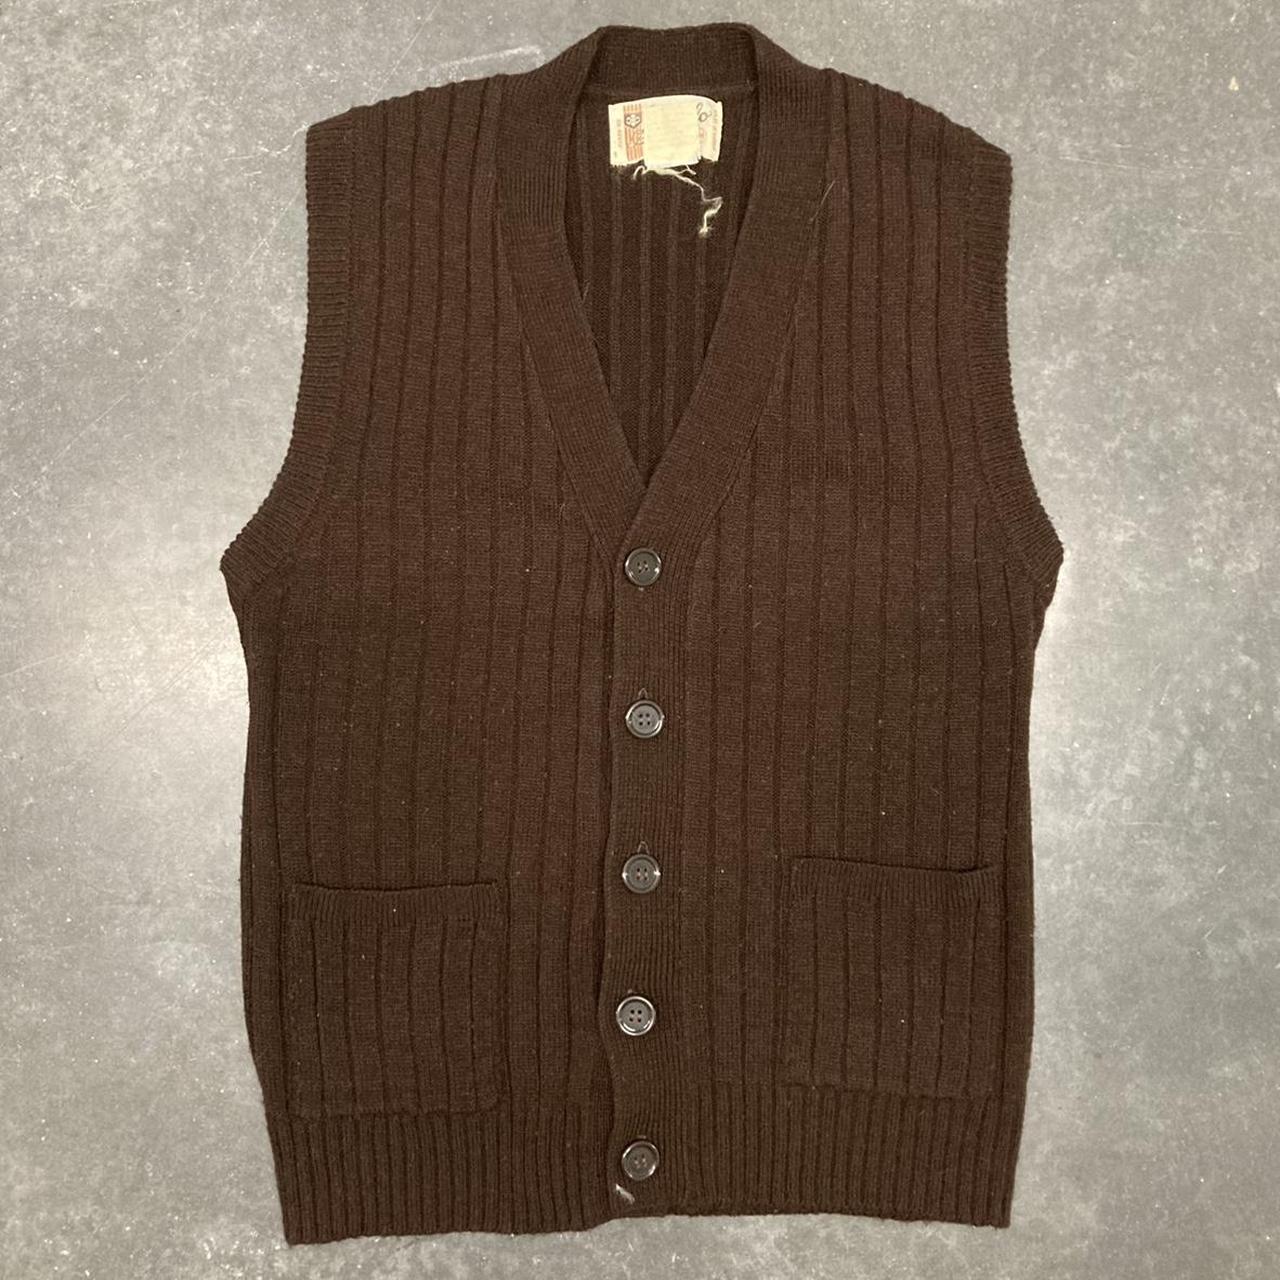 Vintage Brown Sweater Vest. Super cute with front... - Depop